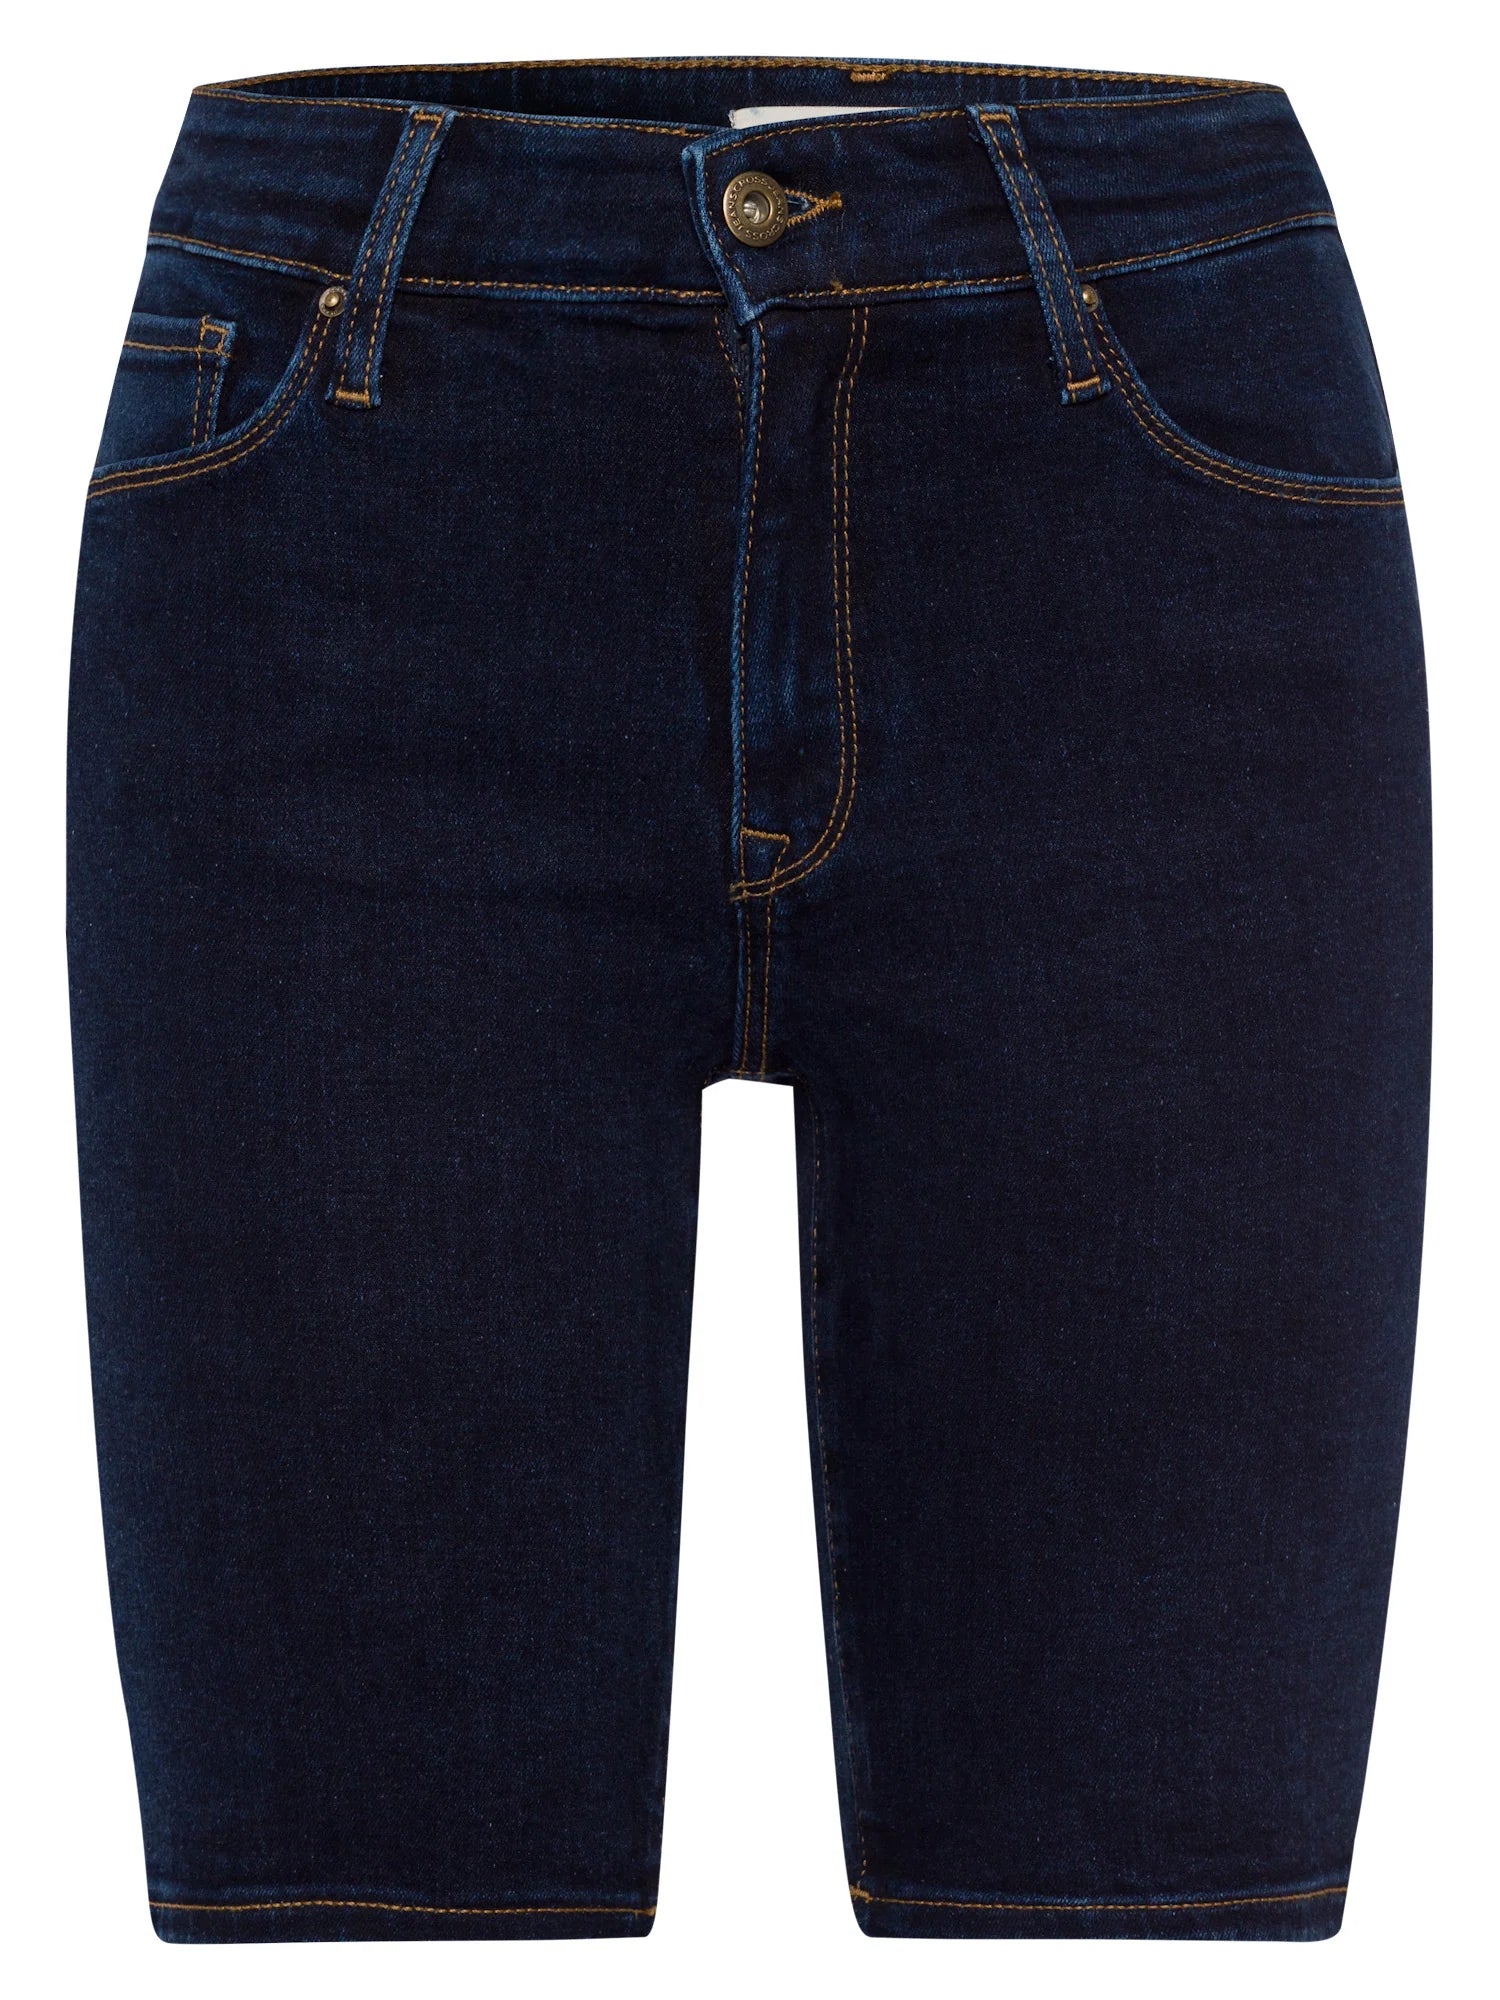 Cross | Jeans Shorts Anya Slim Fit High Waist  | 005 DARK BLUE